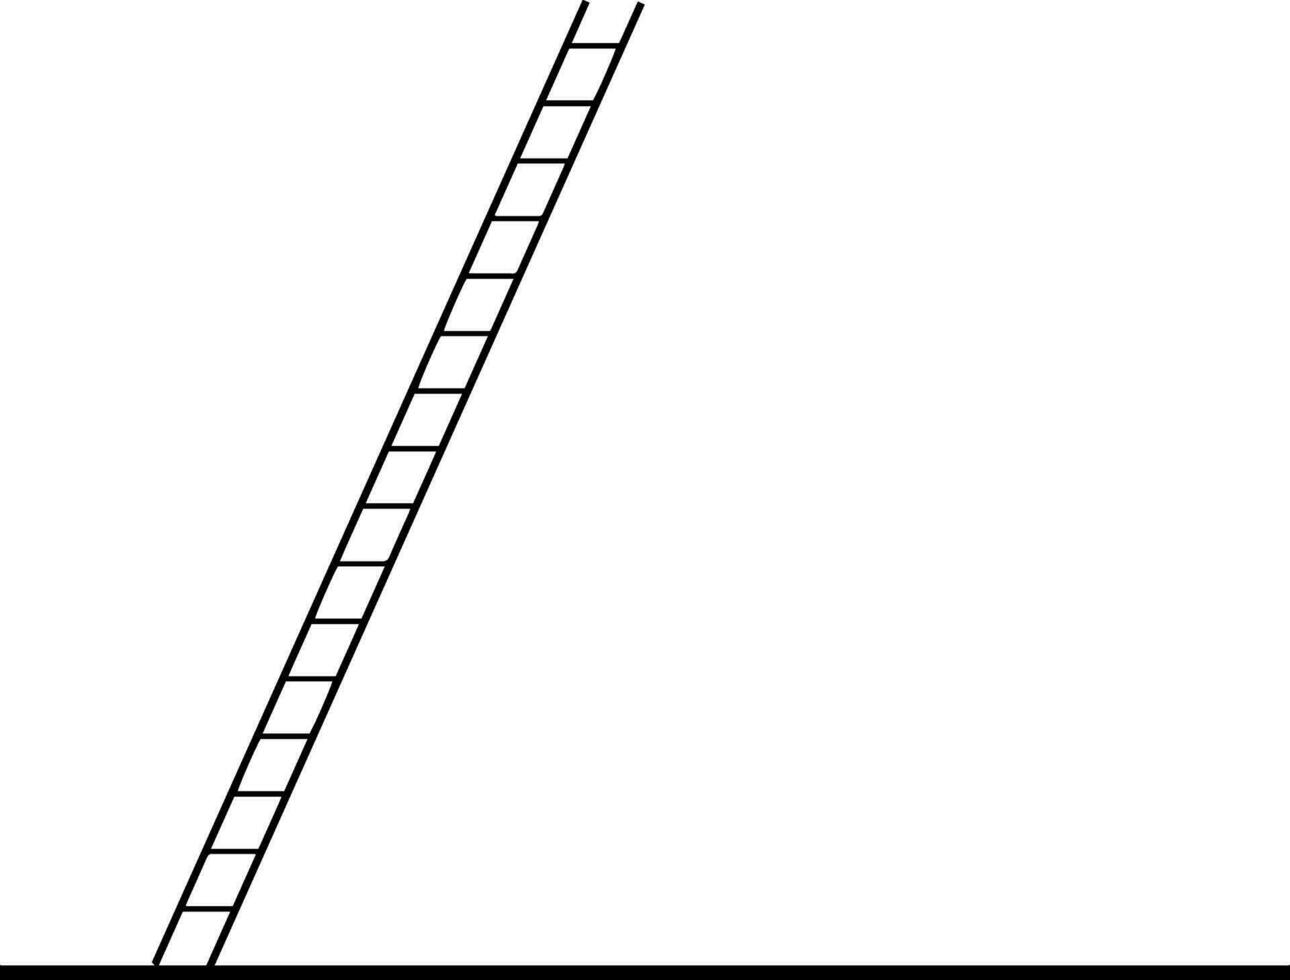 leunend ladder wijnoogst illustratie. vector